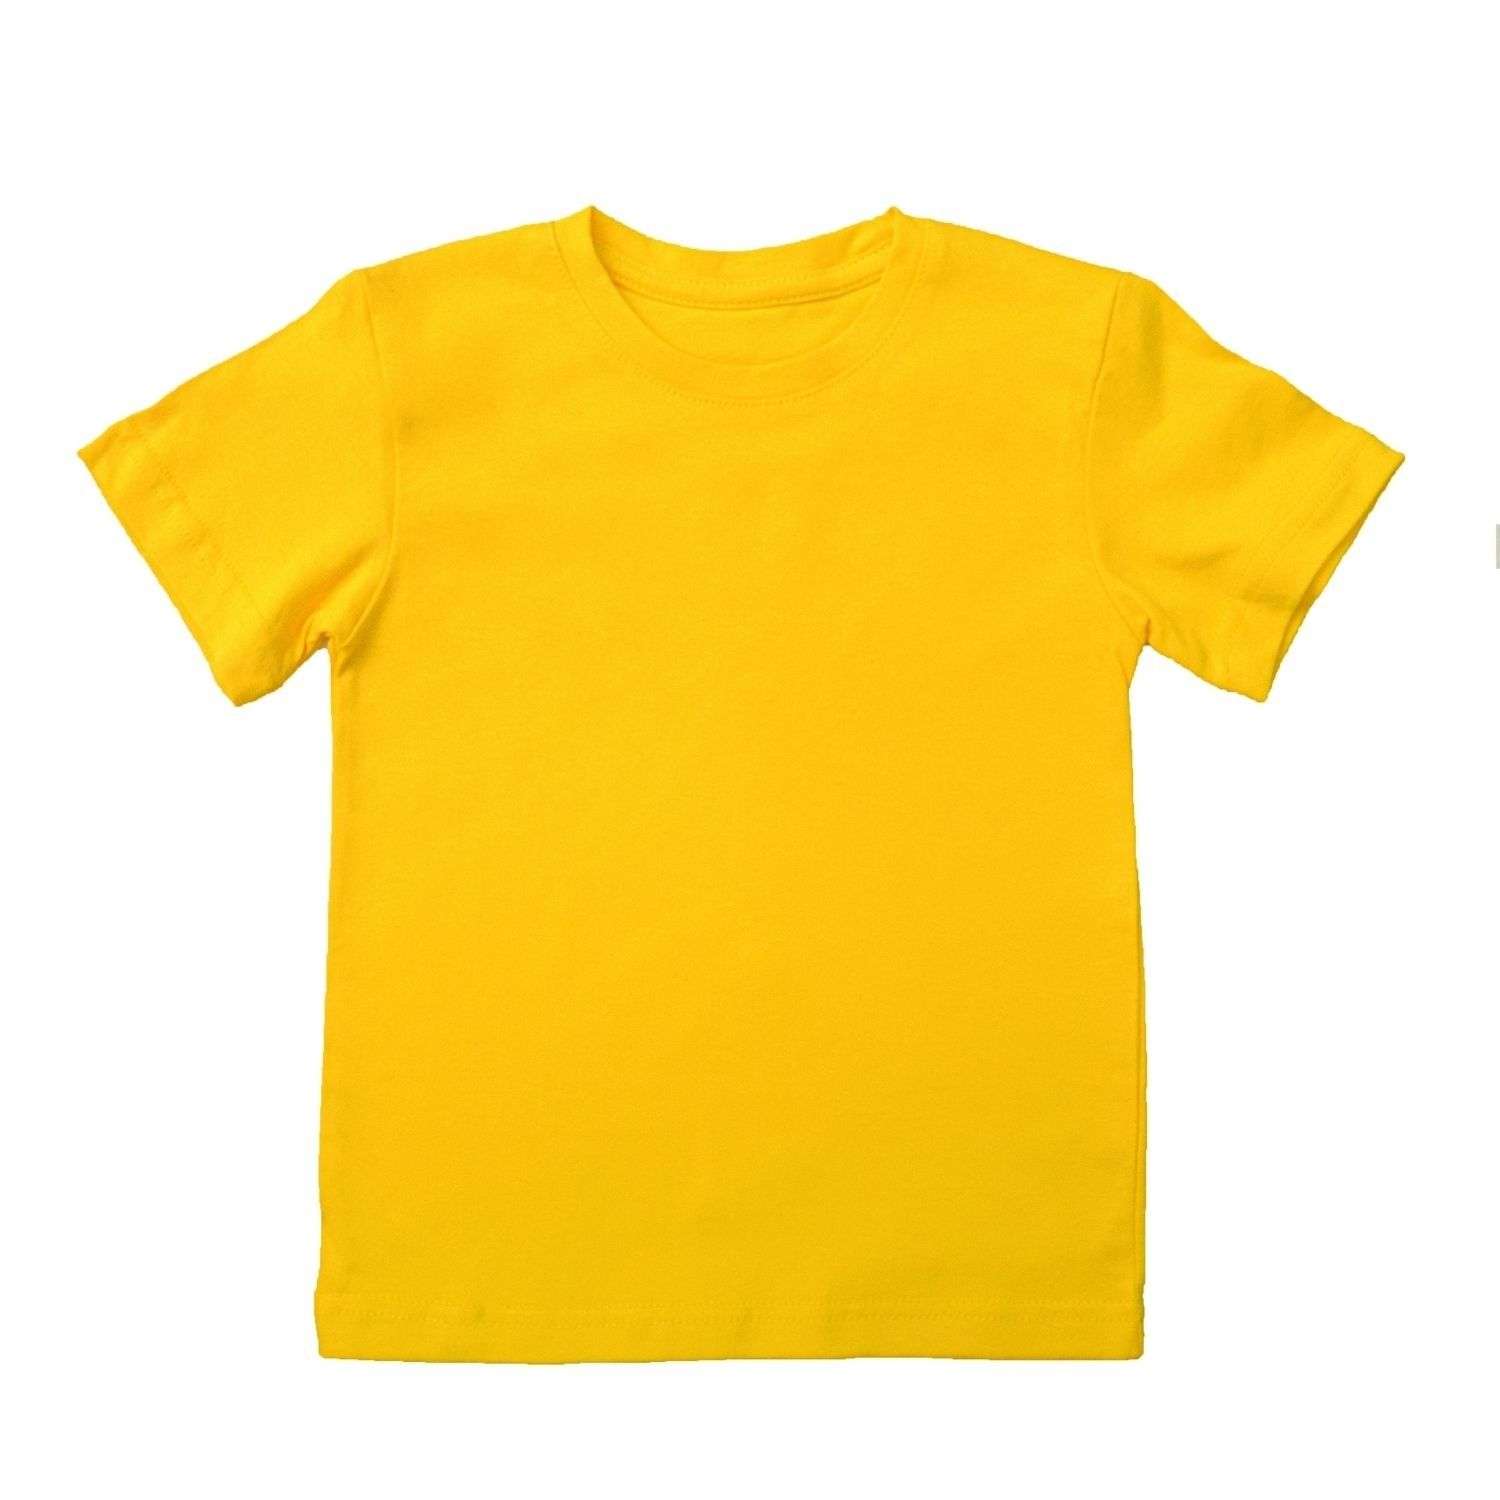 Желтые х б. Футболка желтая. Желтая футболка детская. Футболка детская желтая однотонная. Малыш в желтой футболке.